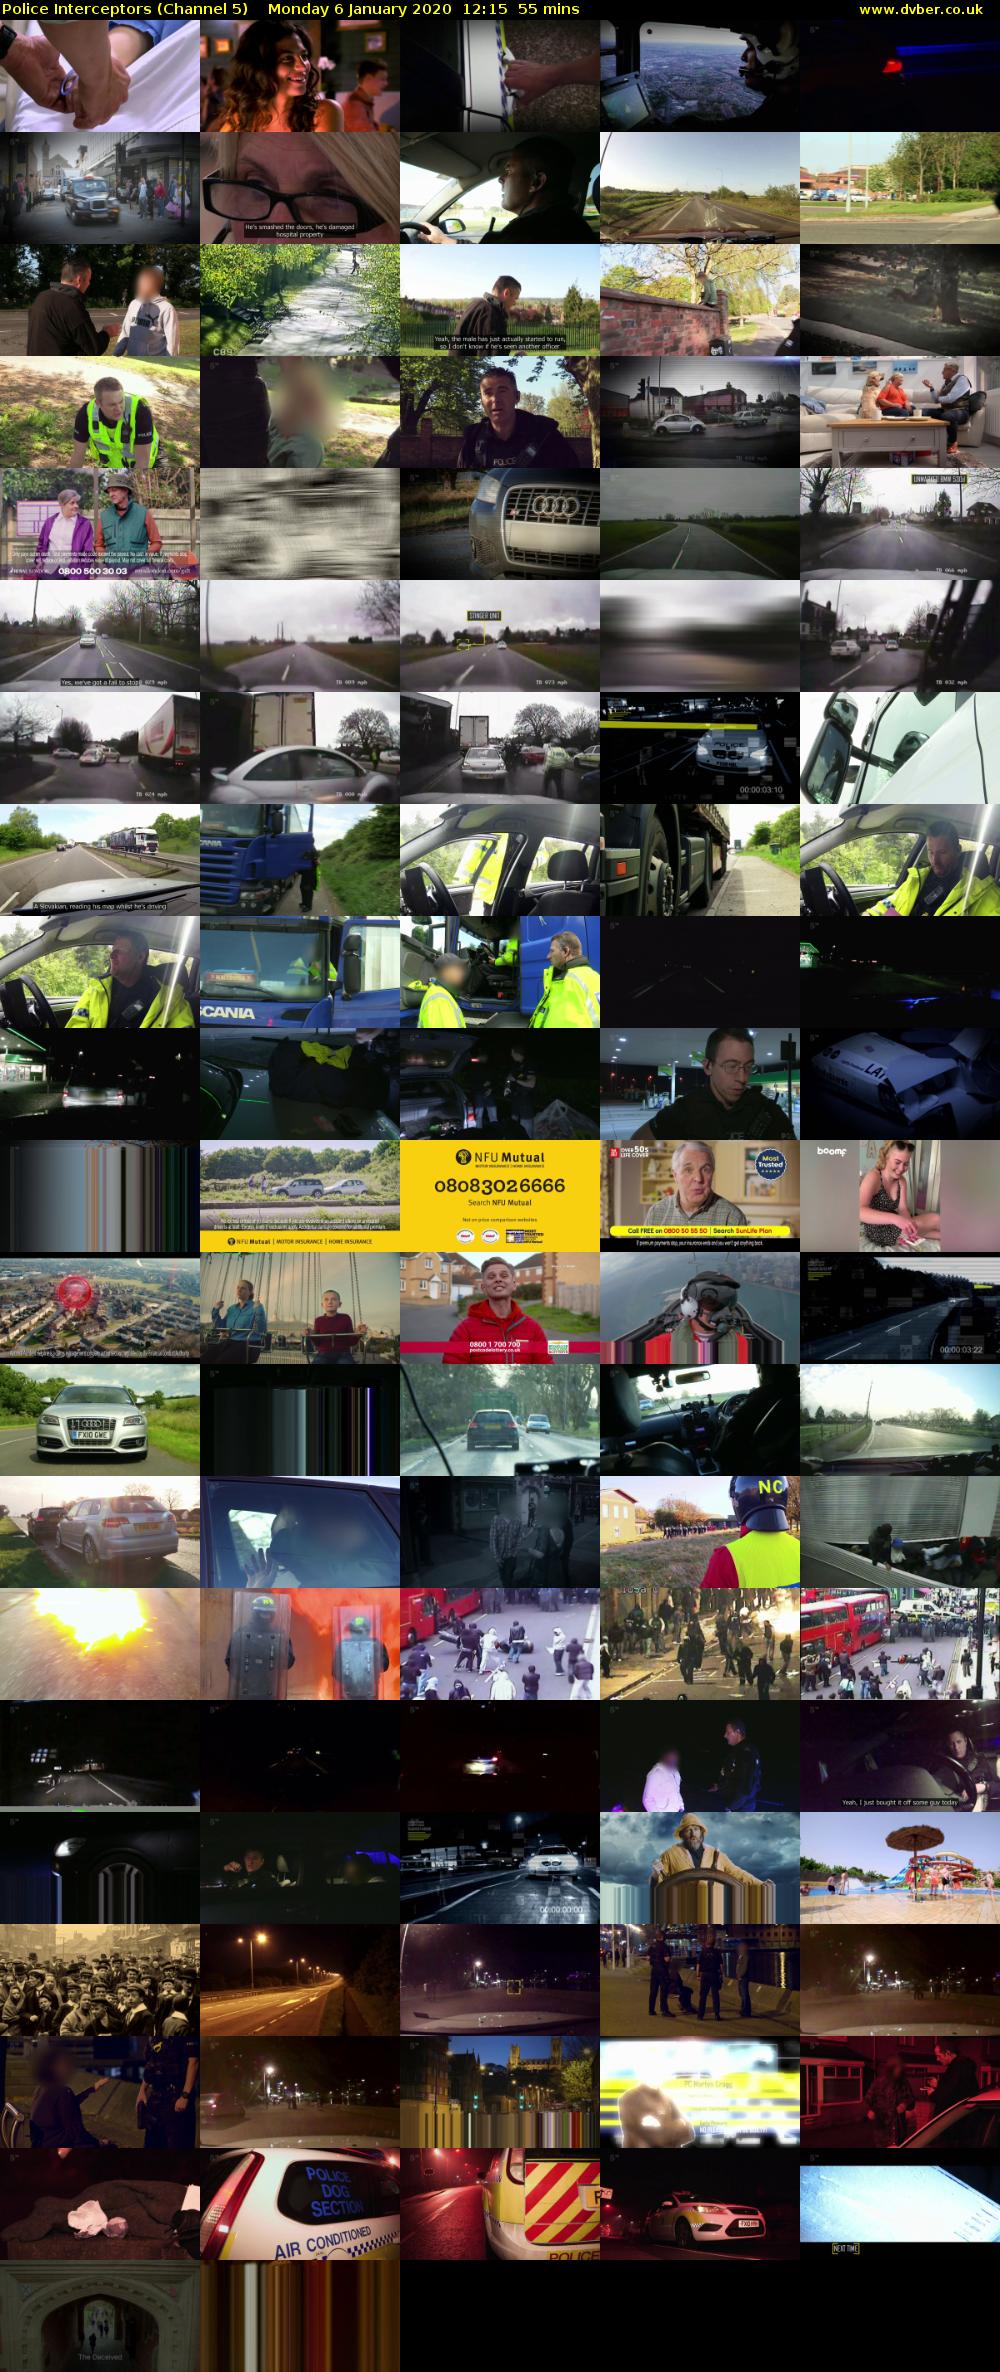 Police Interceptors (Channel 5) Monday 6 January 2020 12:15 - 13:10